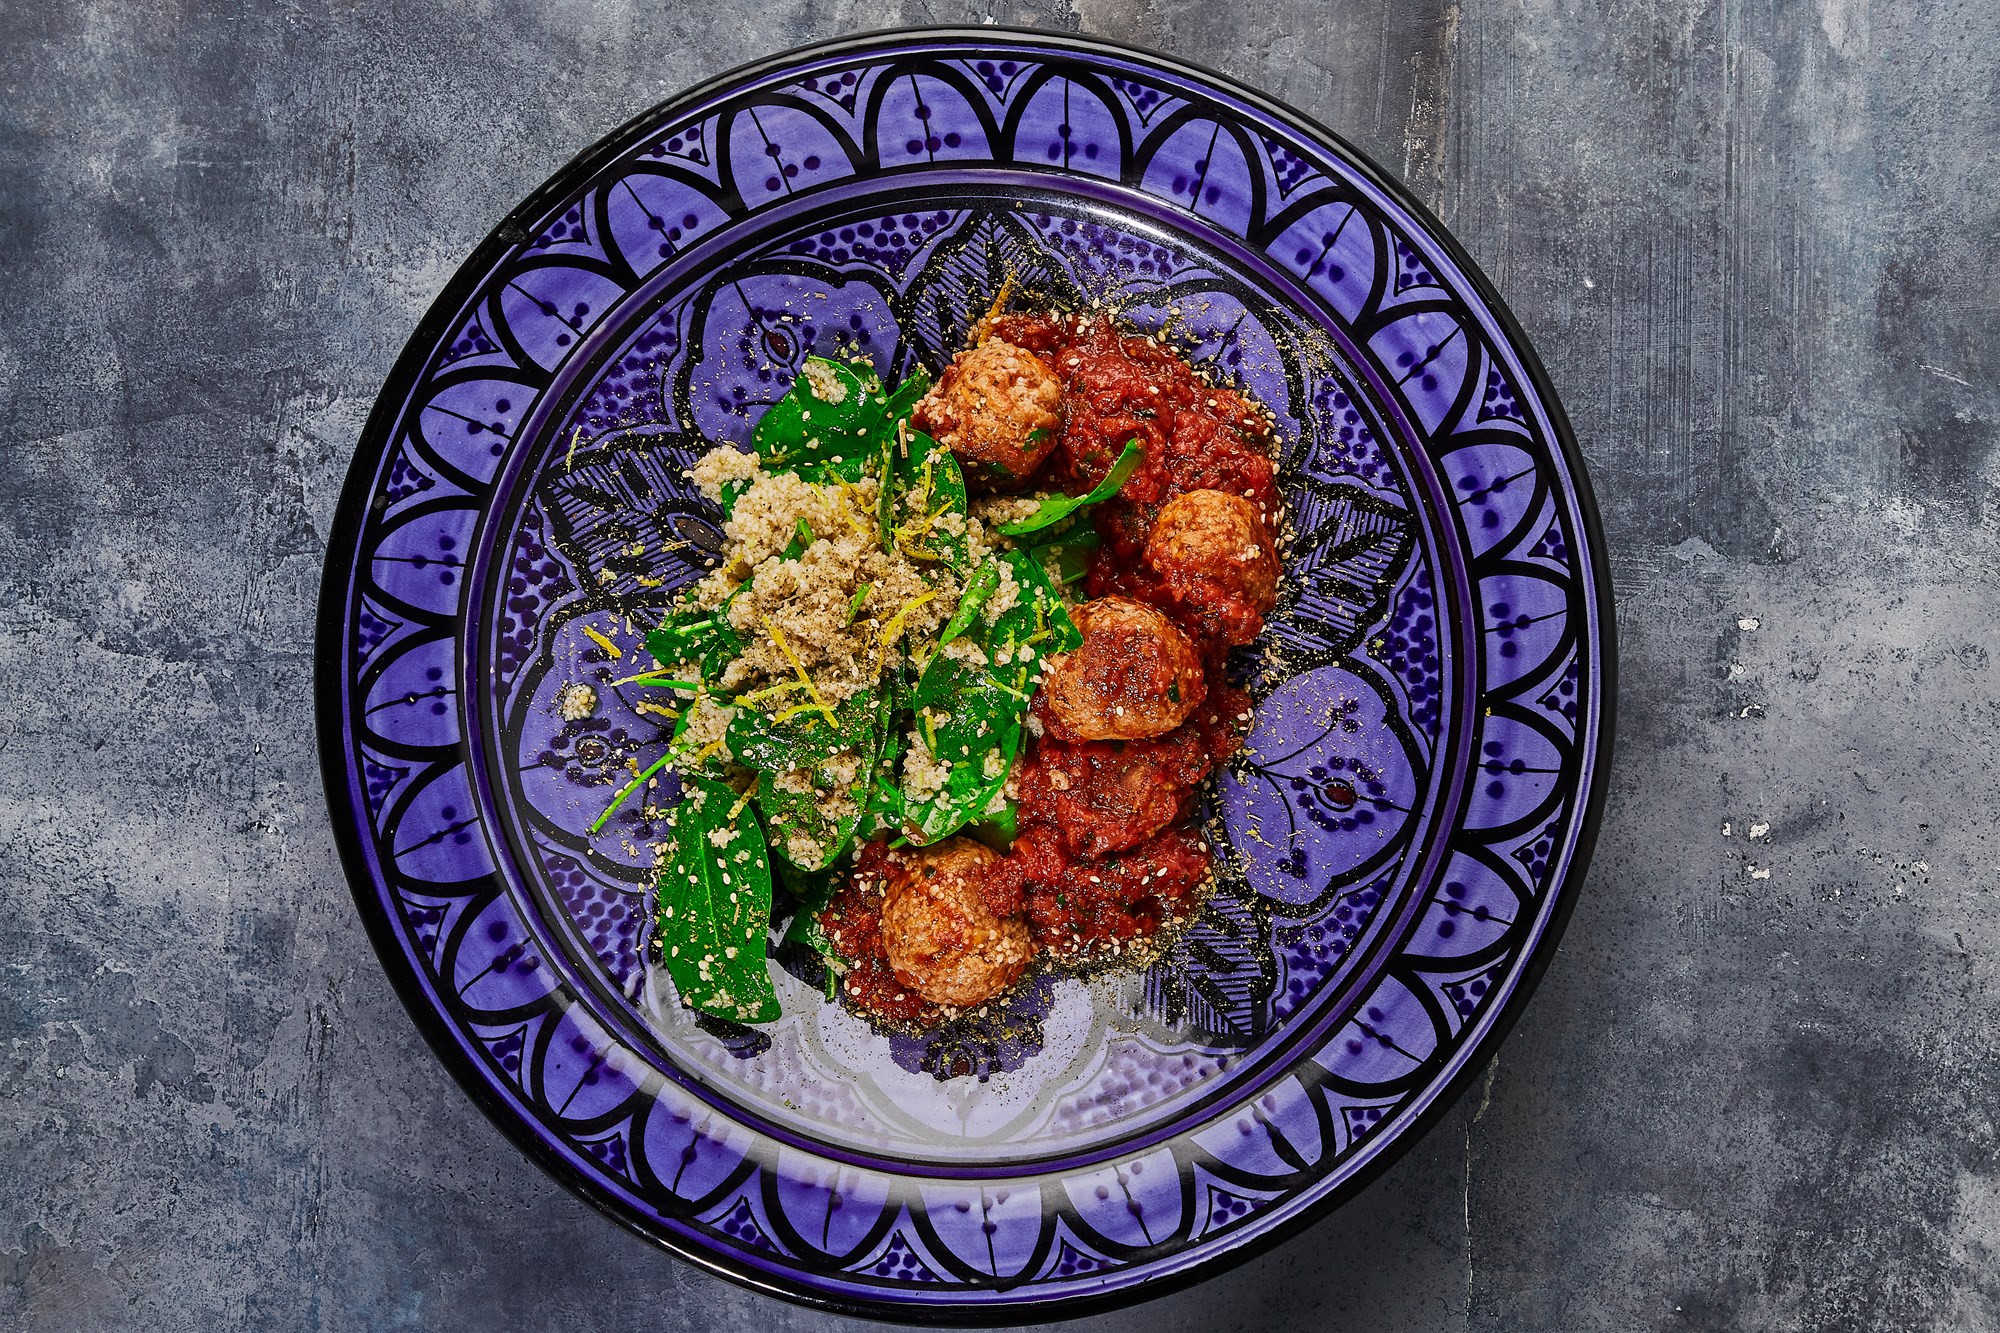 Just heat: Marokkanske kødboller i krydret tomatsovs med spinat, couscous og za'atar